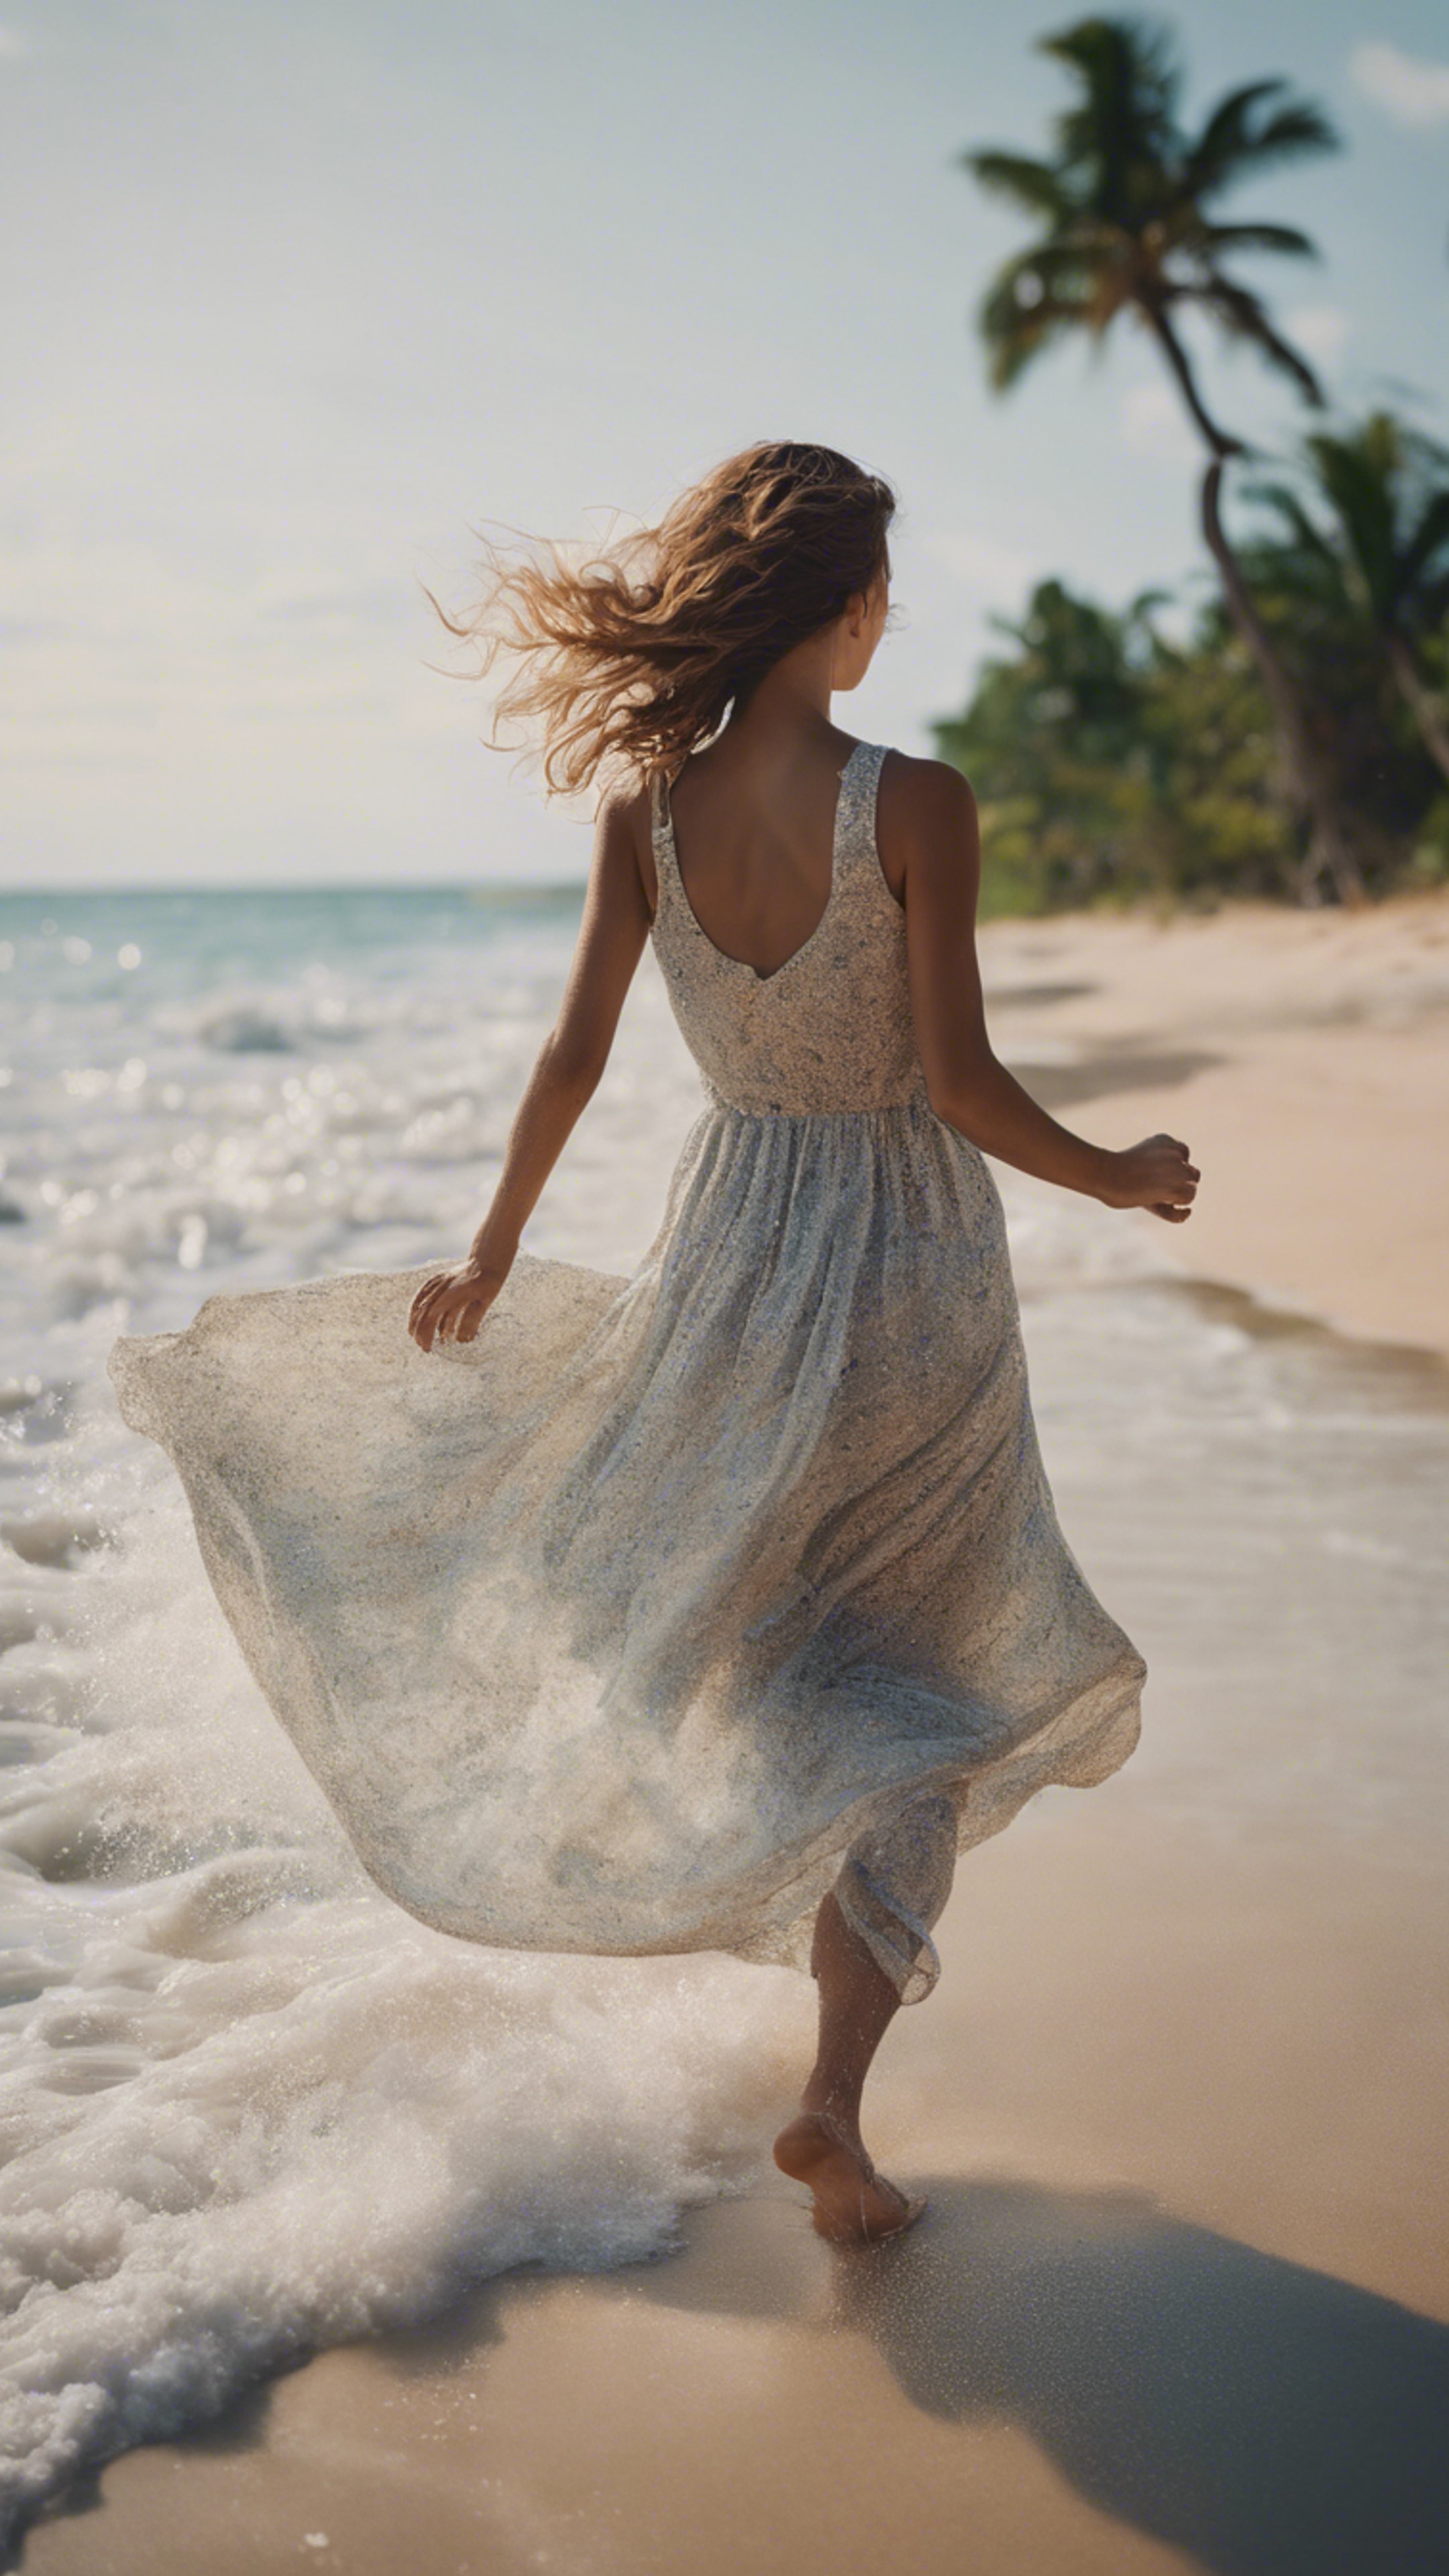 A girl in a flowy dress running alongside the sea at a tropical beach. Tapeta[6de970100921406193d7]